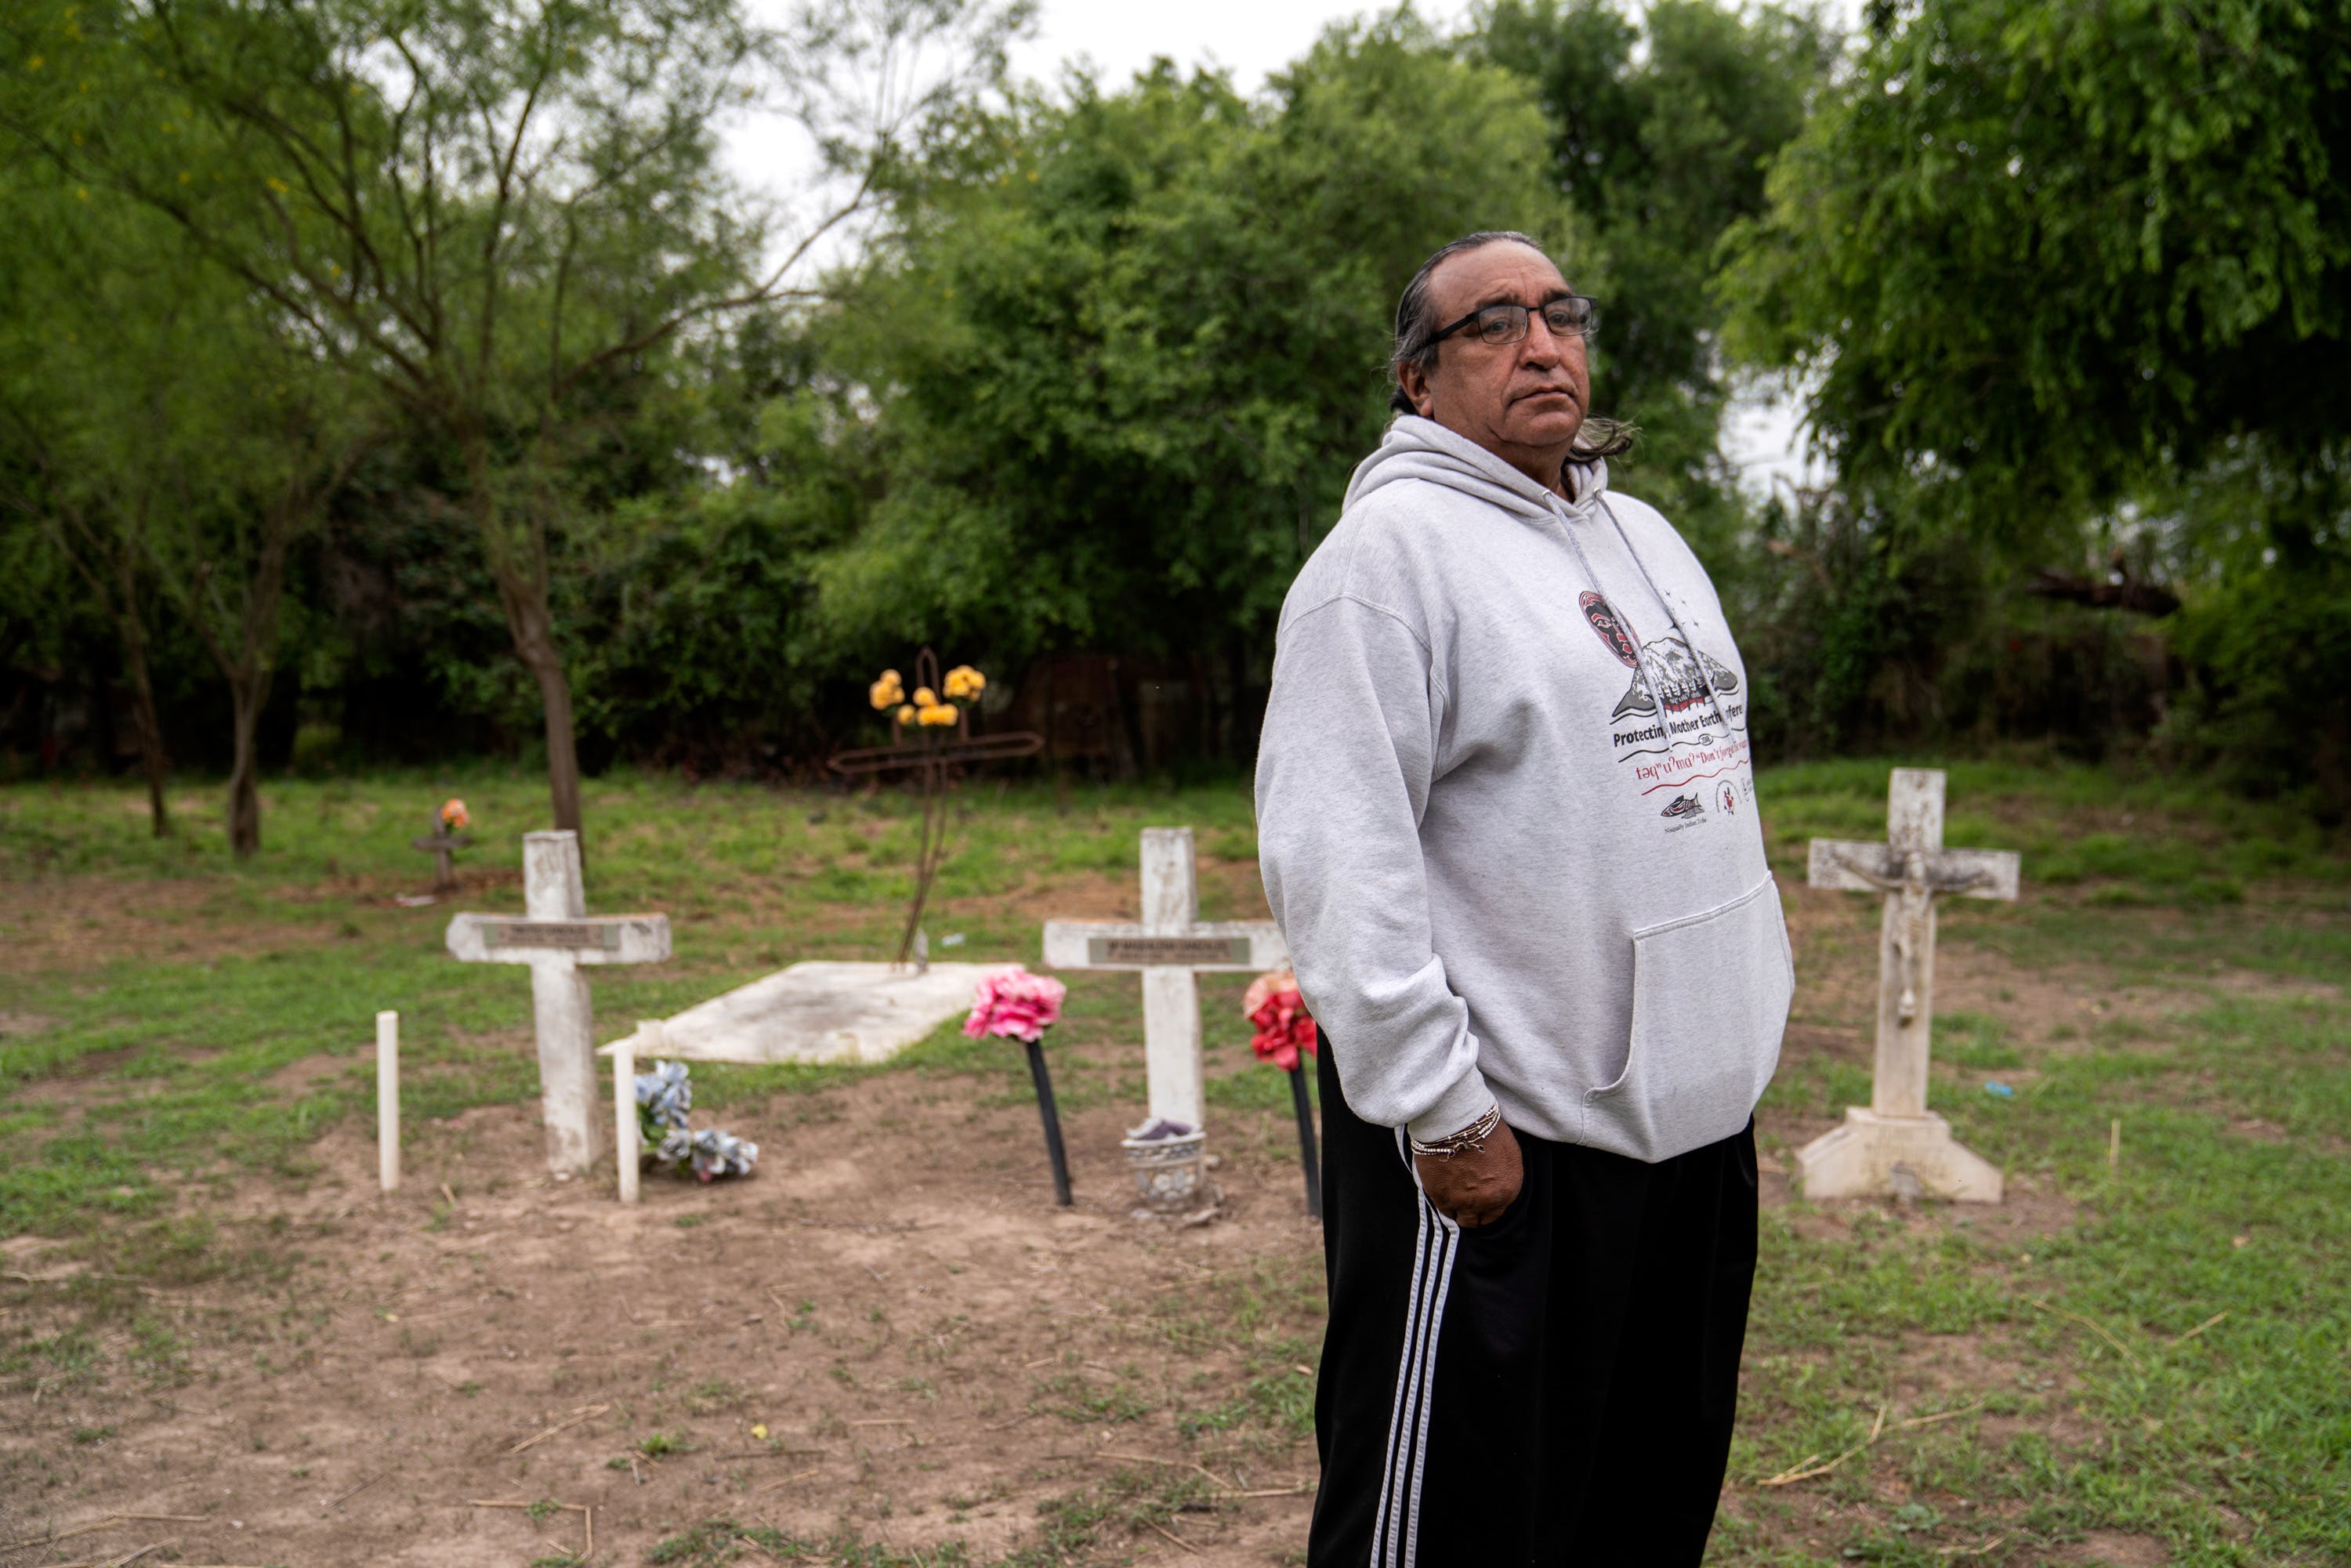 Juan B. Mancias poses for a photo at the Eli Jackson Cemetery in Hidalgo County, Texas on March 17, 2019. Photo: Verónica G. Cárdenas for The Intercept